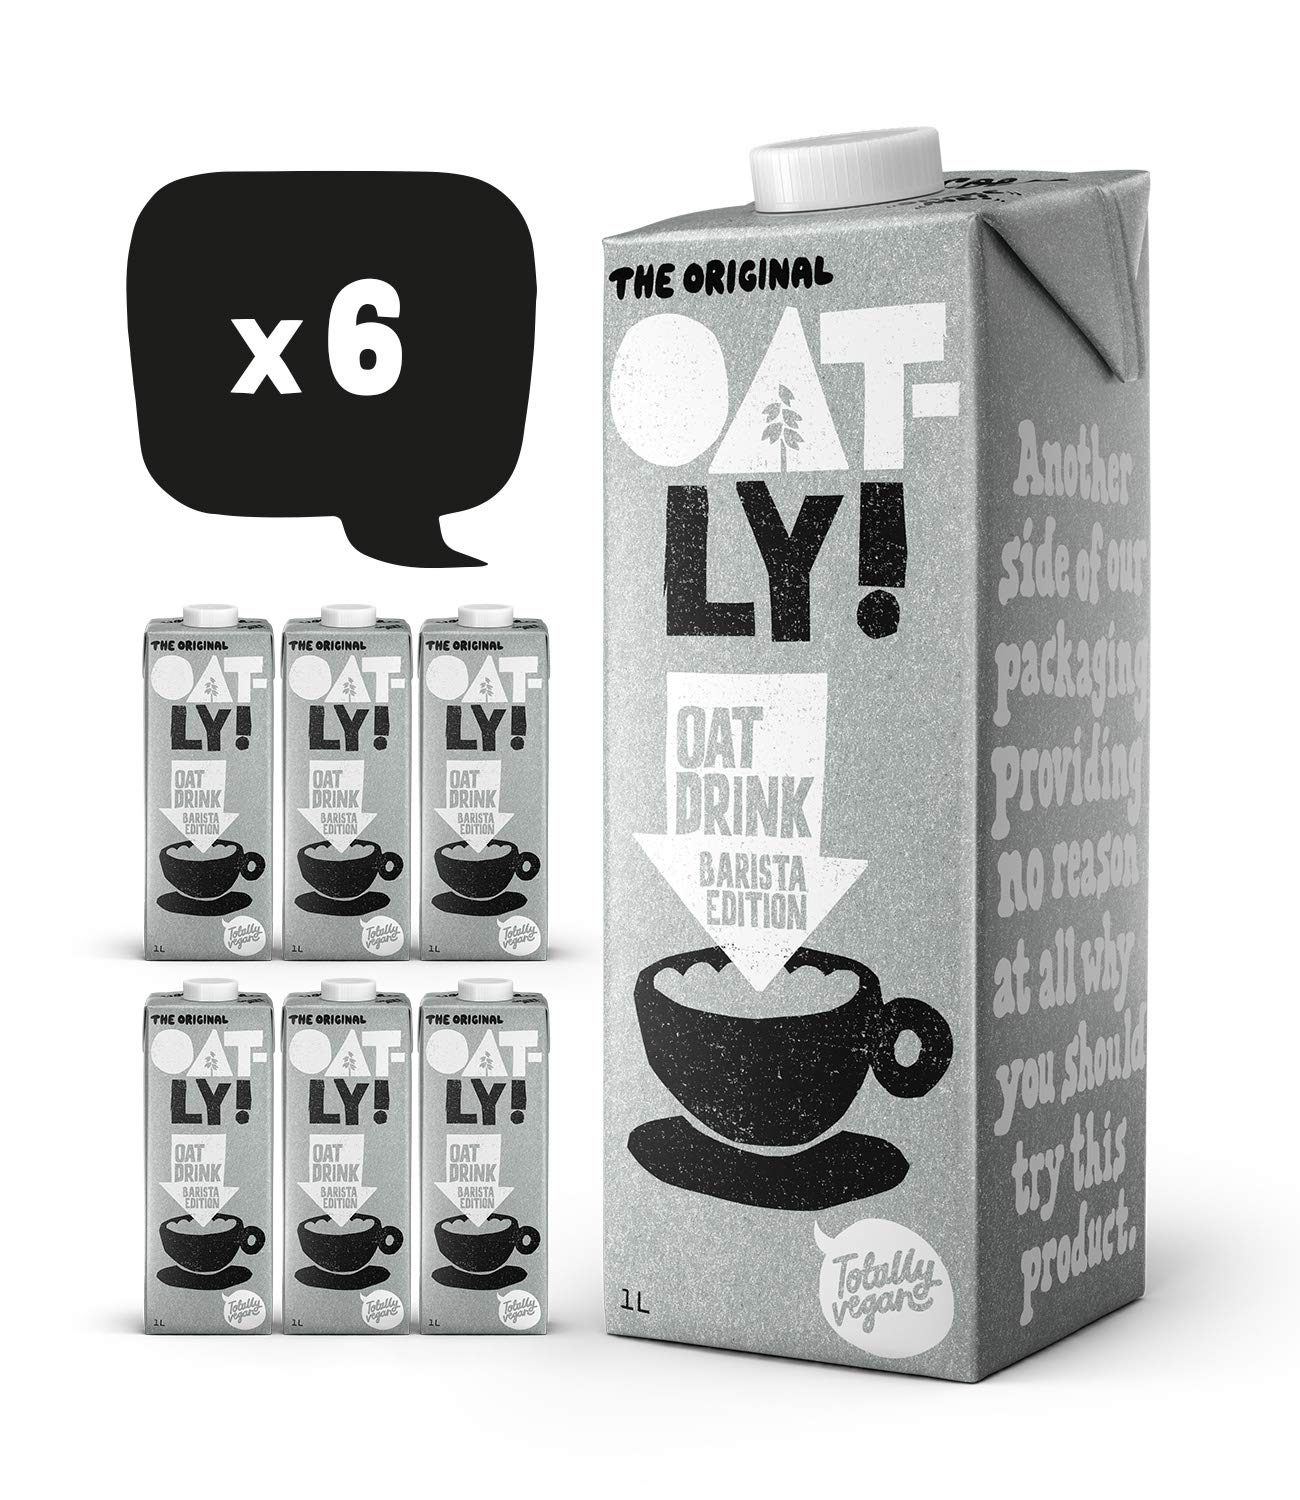 OATLY! Barista Foam-Able Oat Drink, 1L - Pack of 6, Vegan, Dairy Free